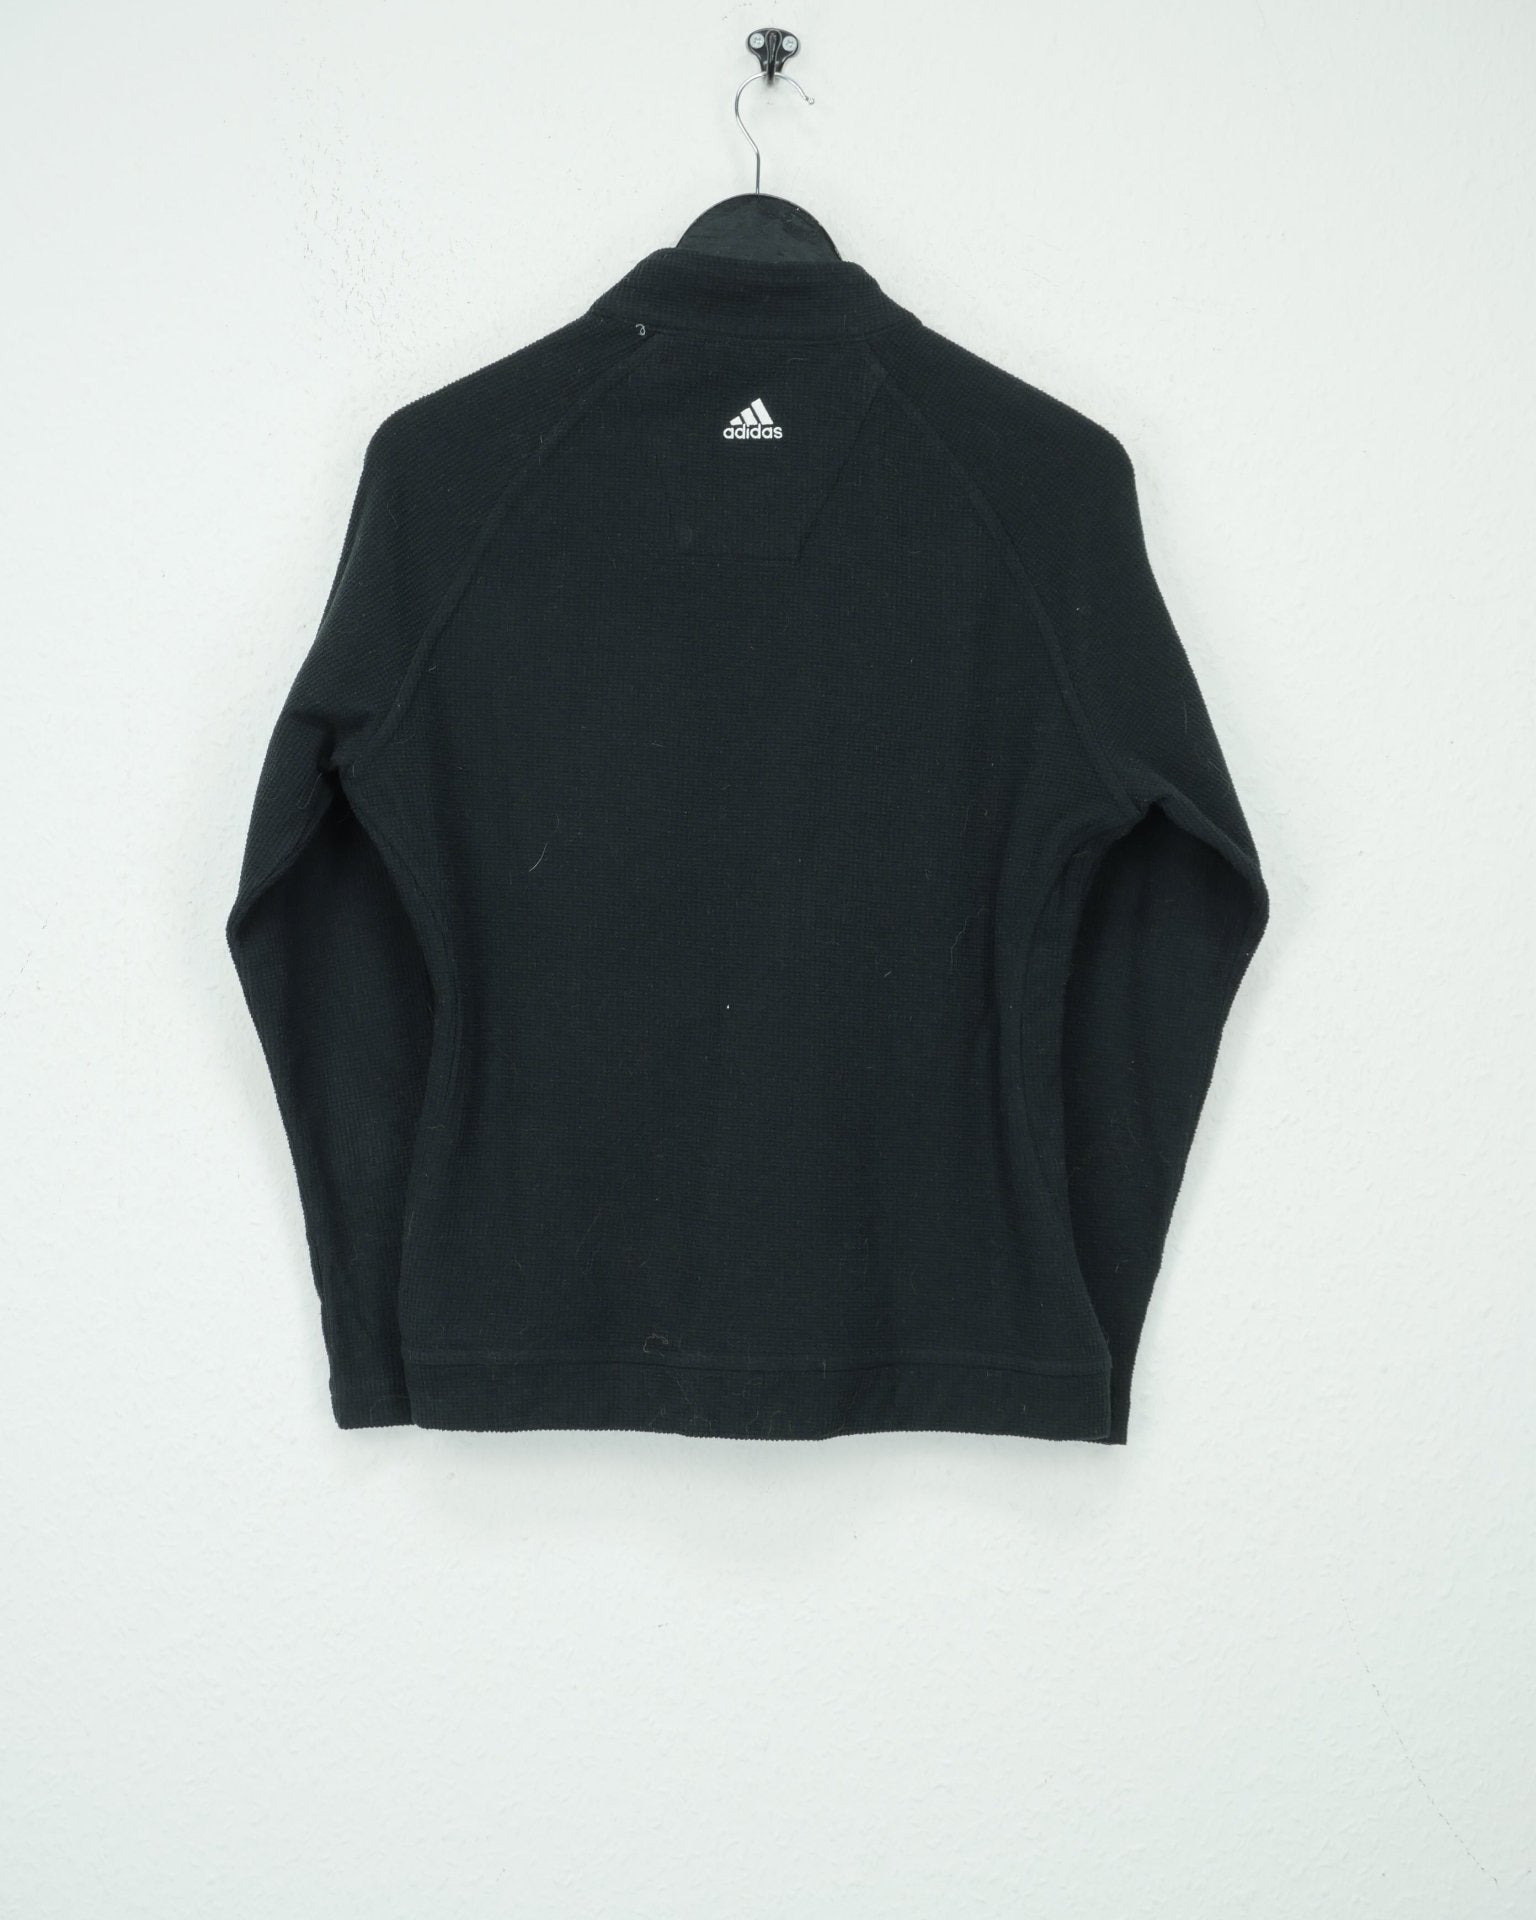 Adidas 'PGA' embroidered Logo Zip Sweater - Peeces